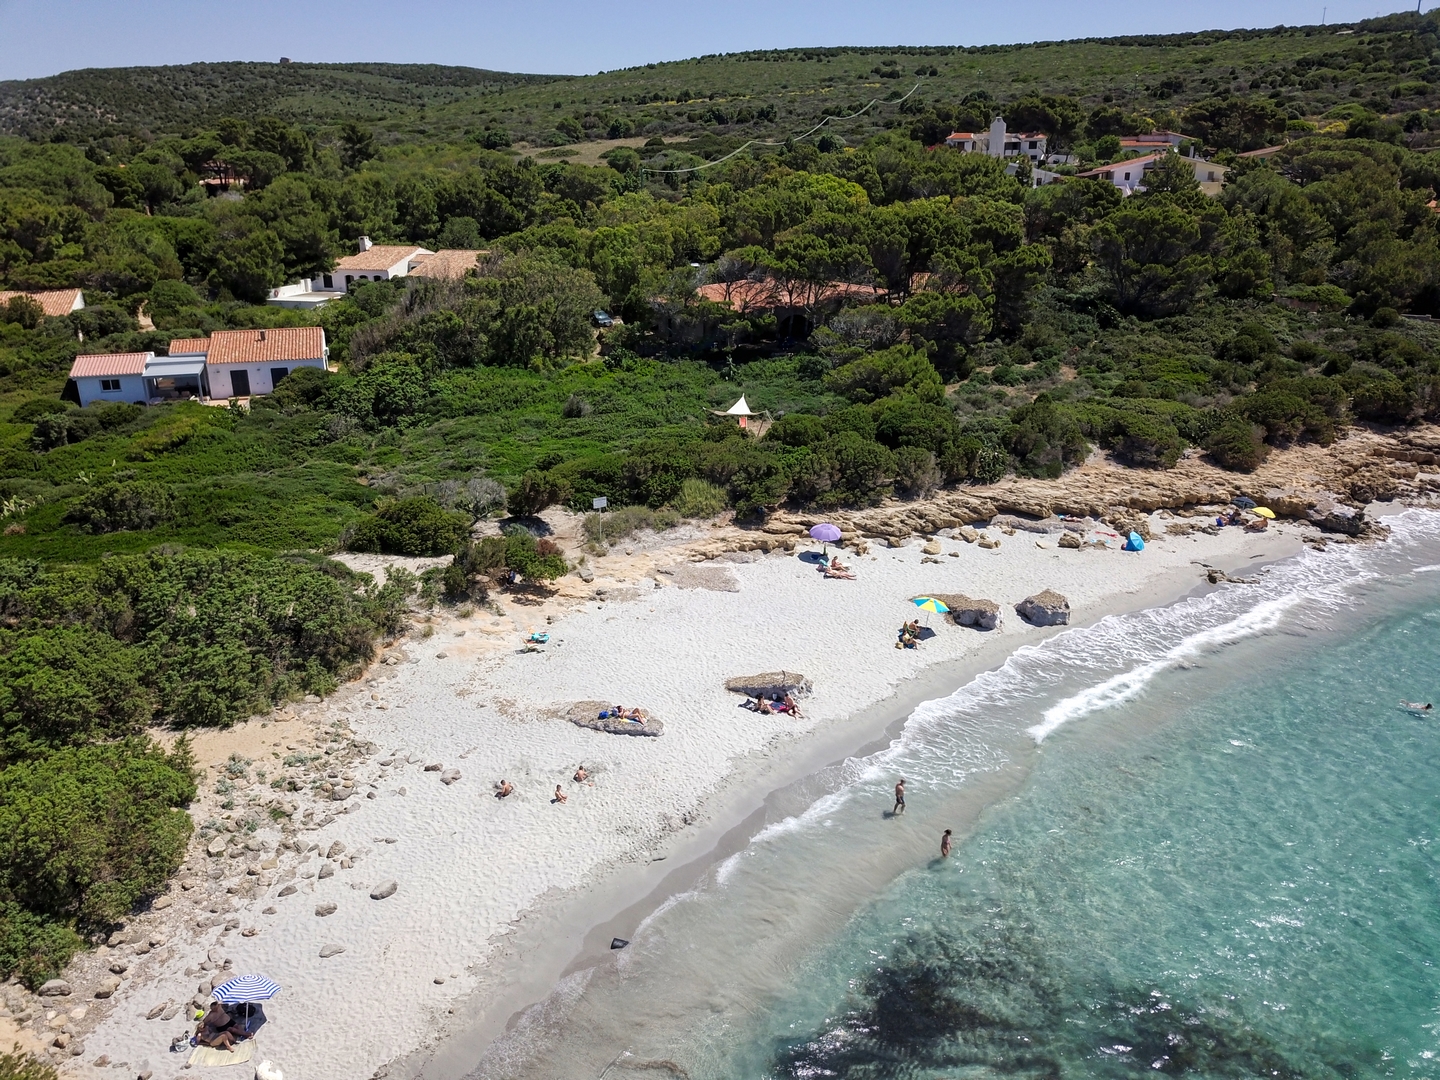 Villa in Sardegna with beach access